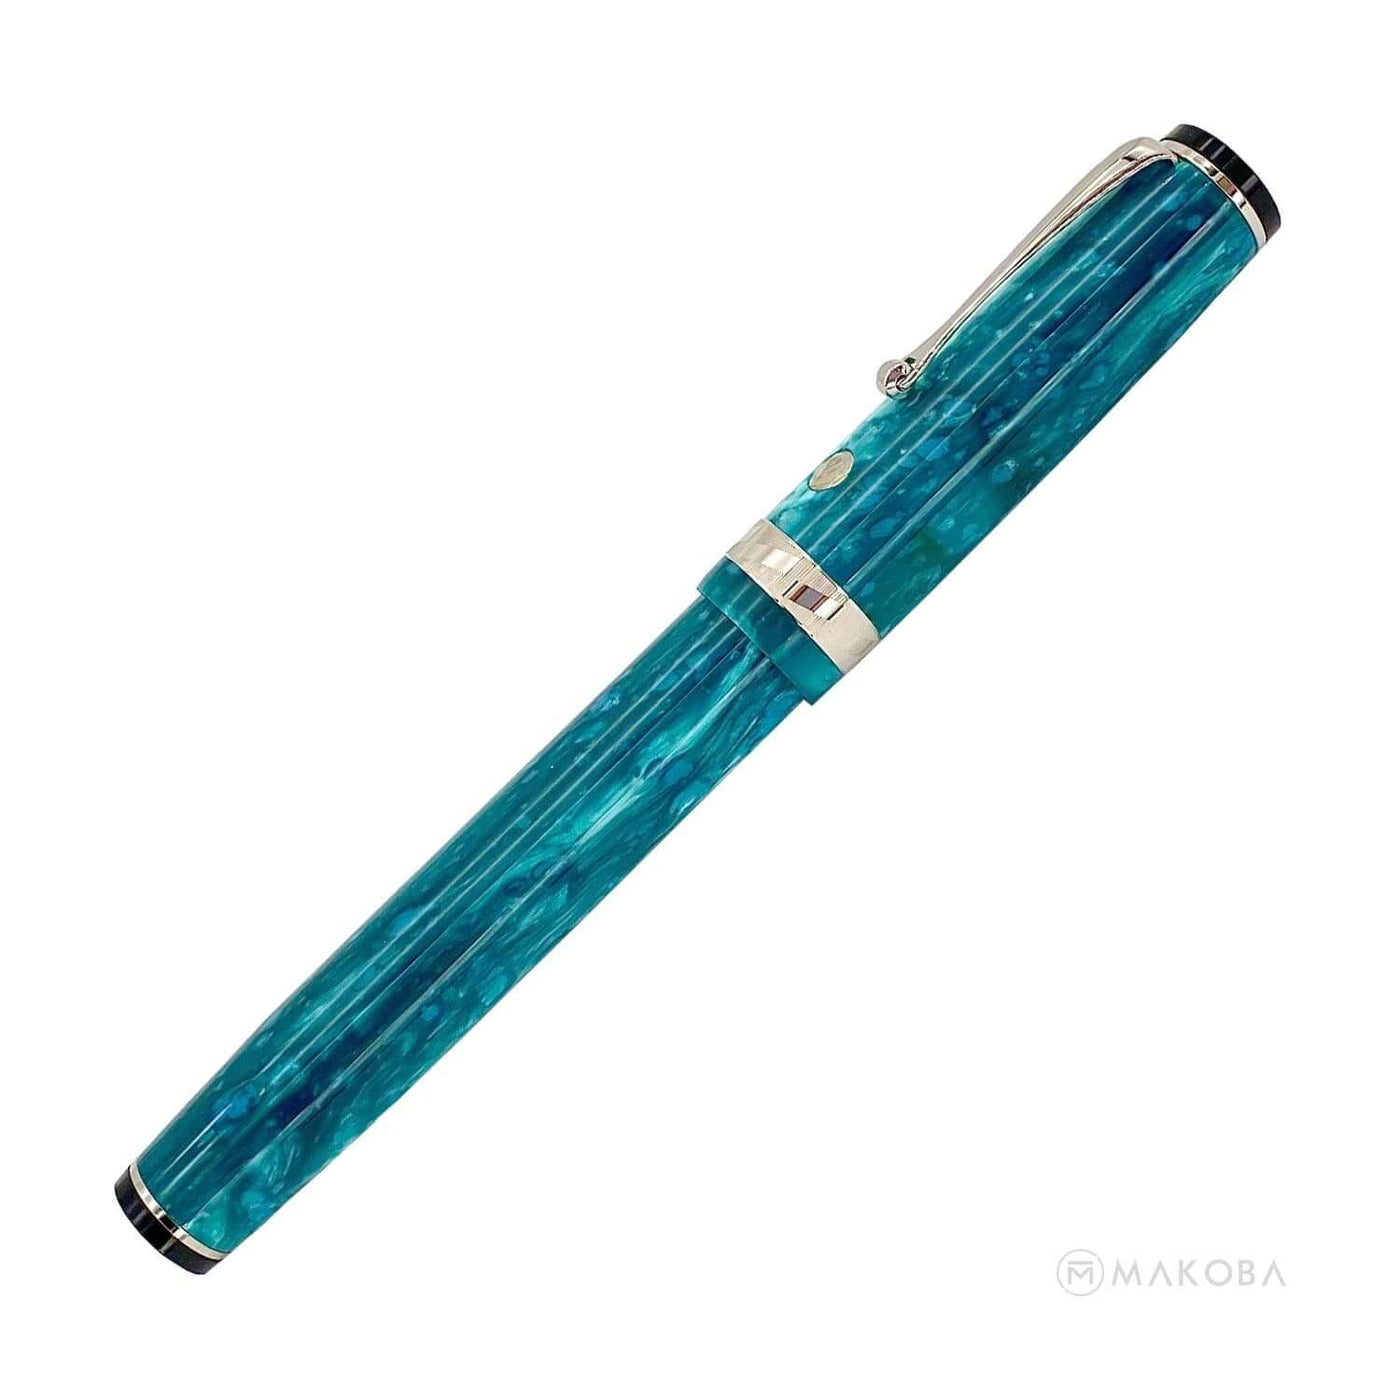 Wahl Eversharp Signature Classic Fountain Pen, Jade (Green) / Rhodium Trim - 18K Gold Nib 4